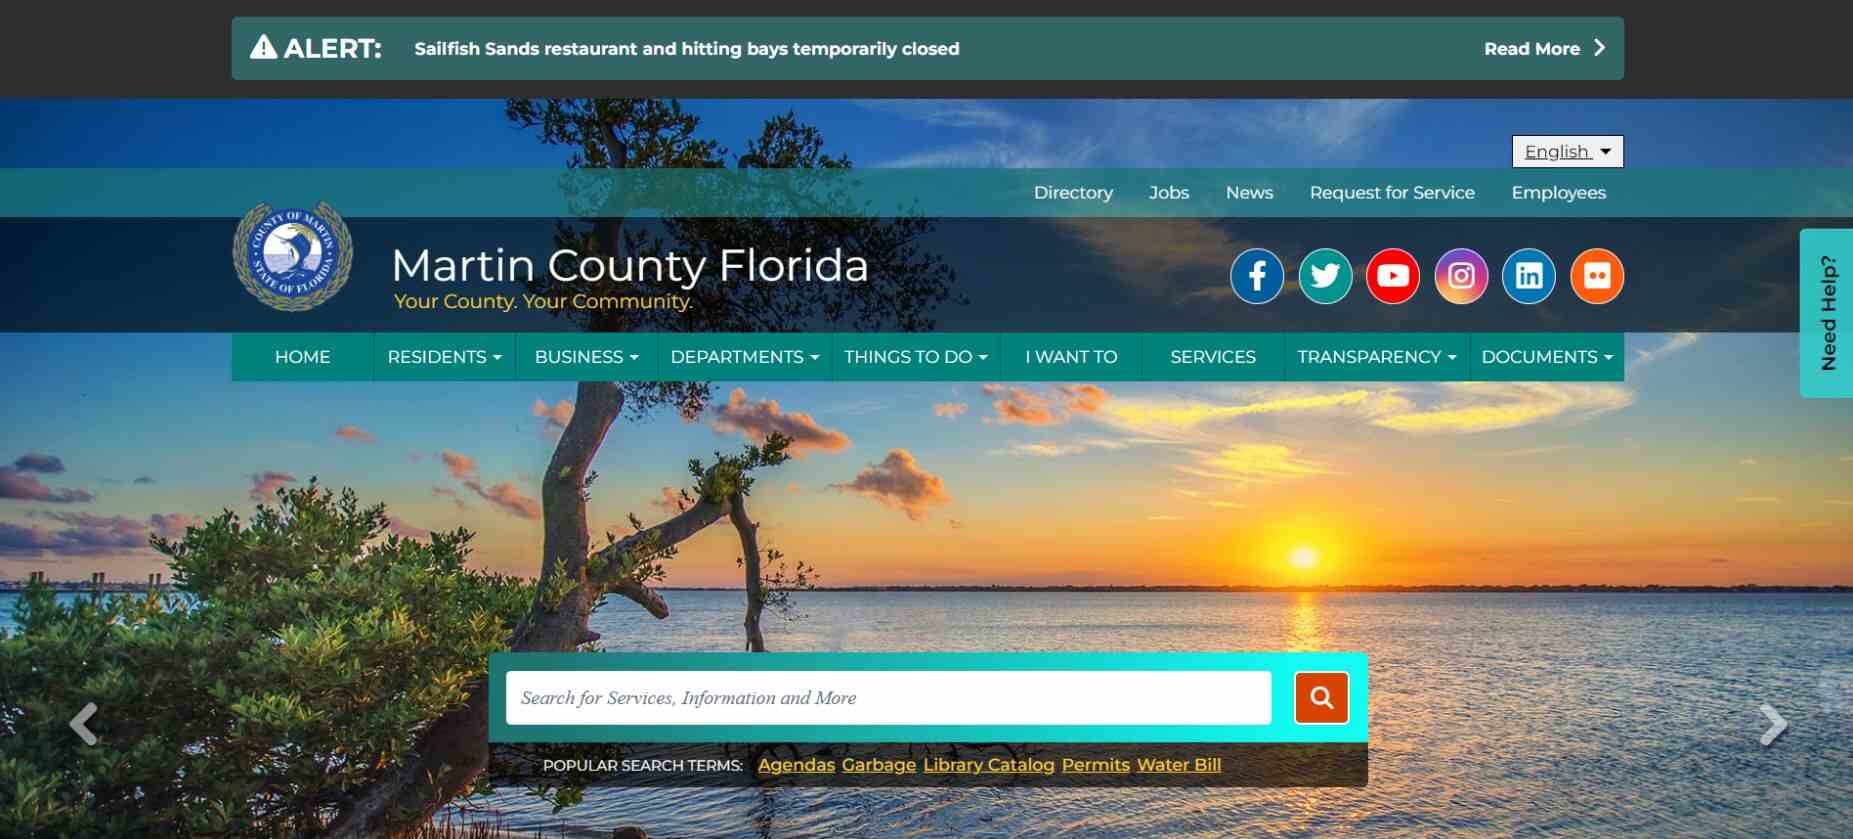 Martin County, Florida website homepage